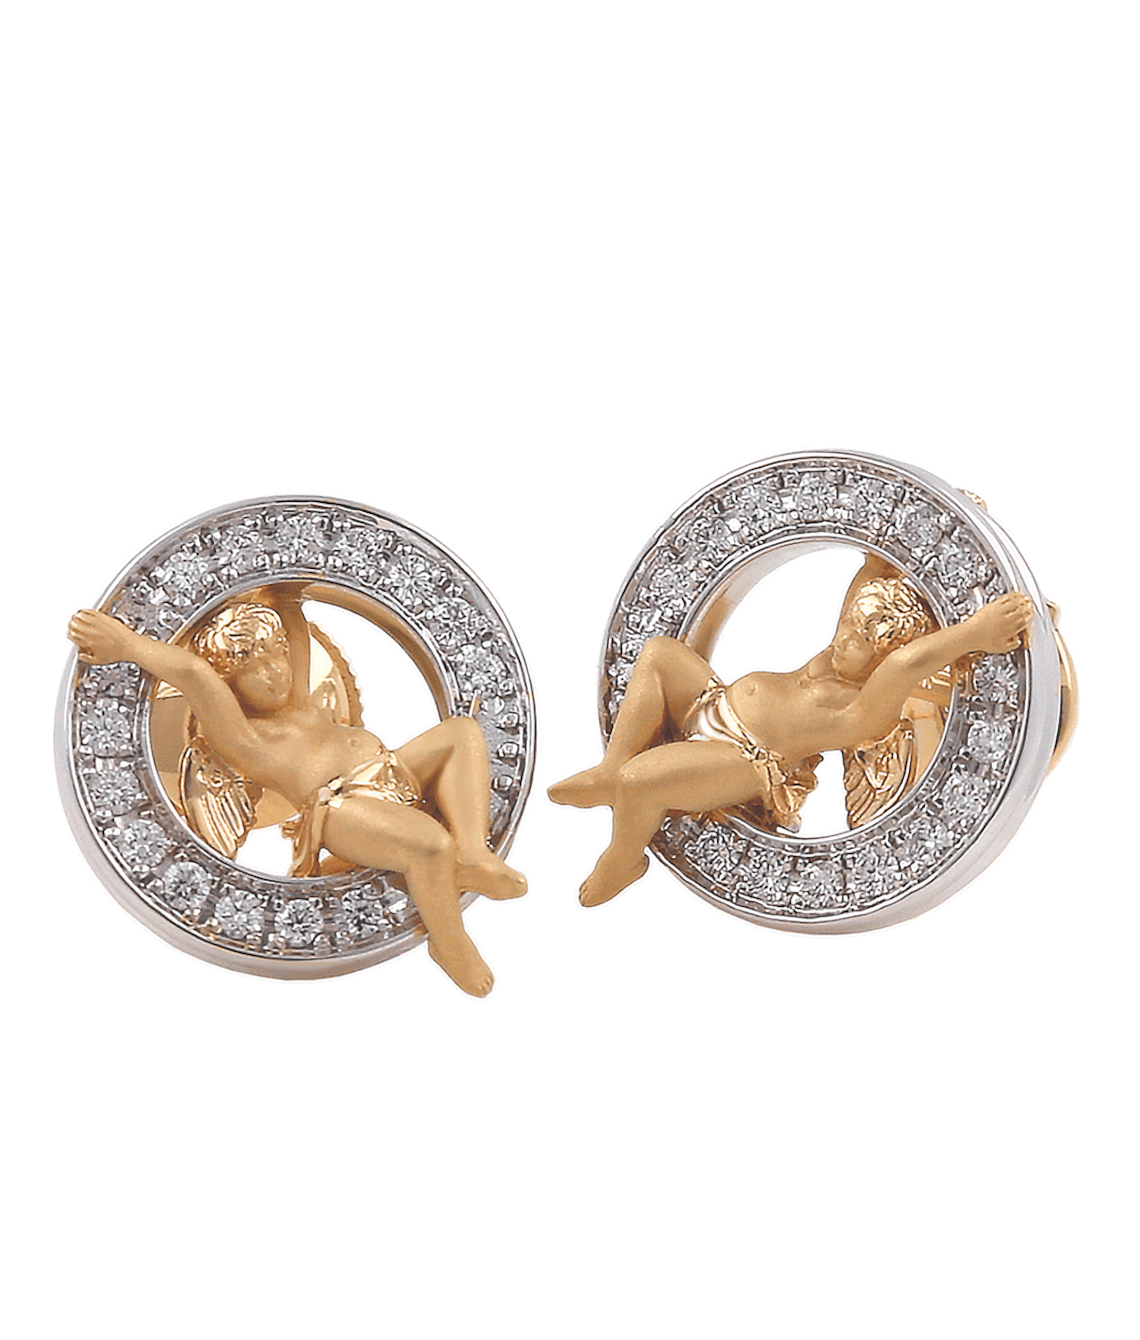 Gold Earrings “ANGELS” - Manuel Carrera Cordon